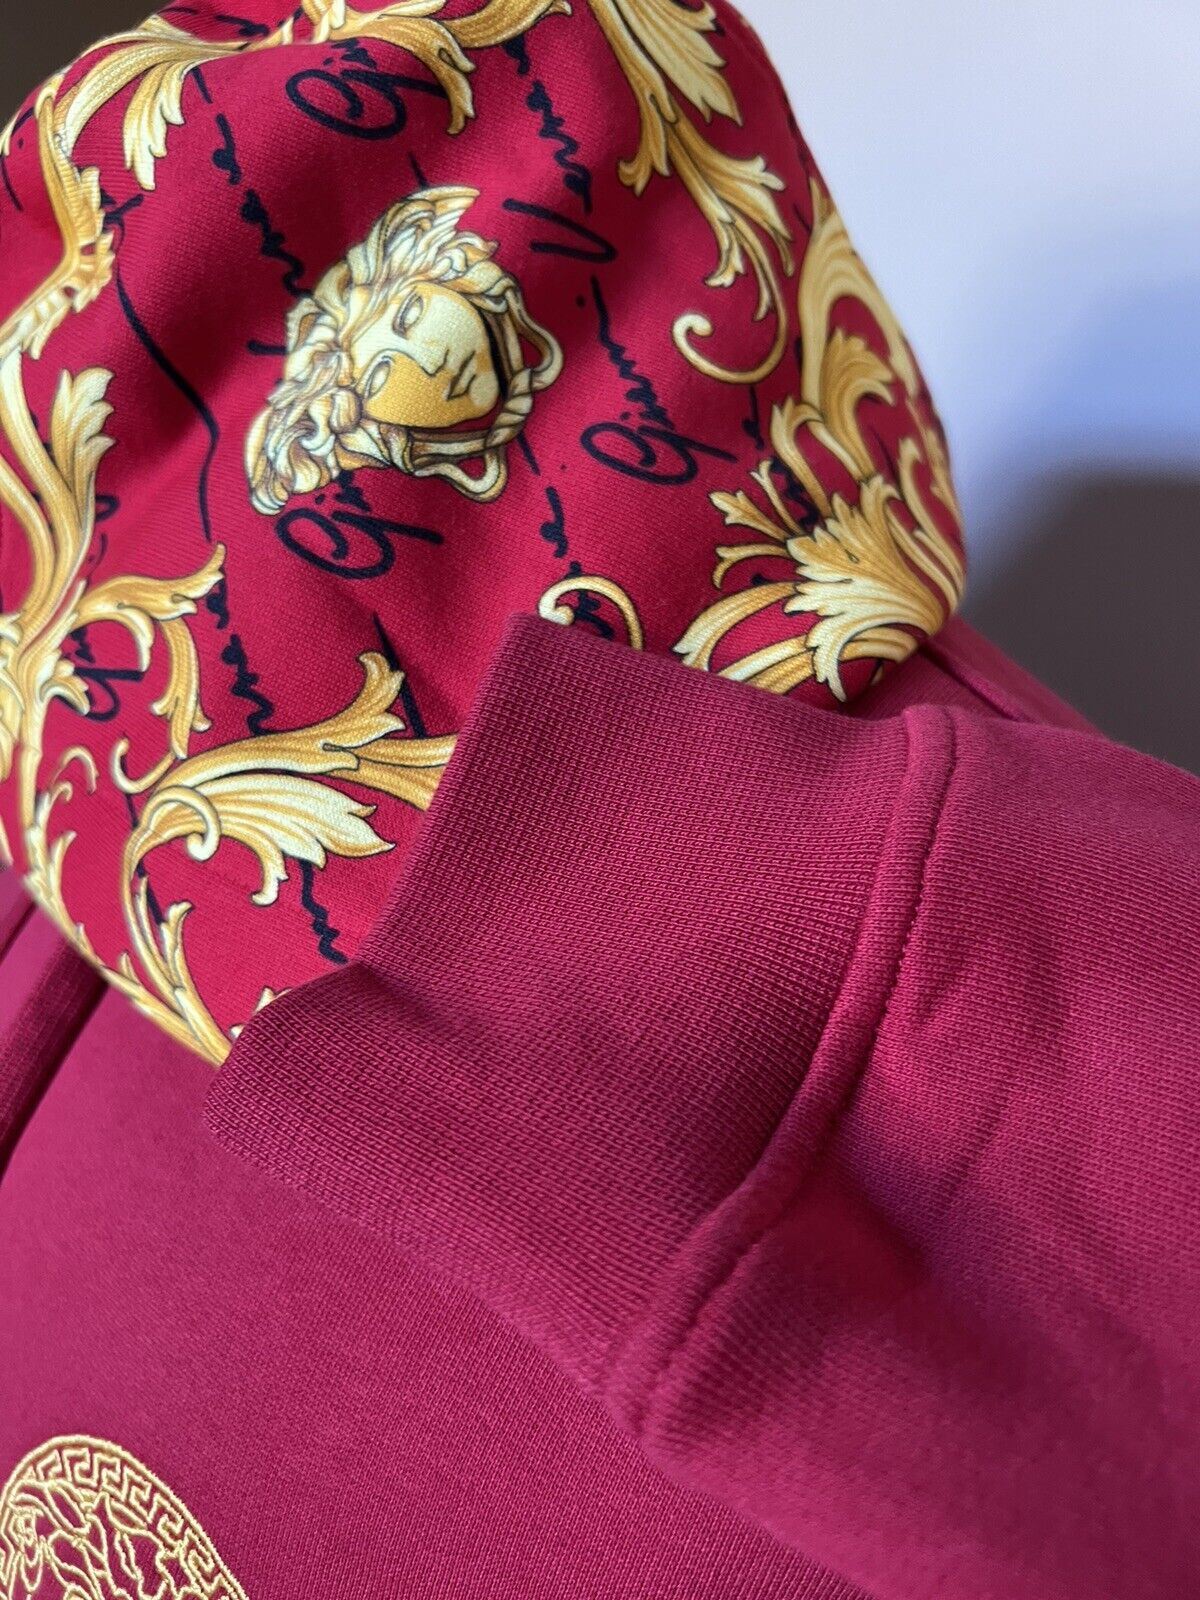 NWT $1150 Versace Medusa Baroque Print Sweatshirt with Hoodie Red S 1003253